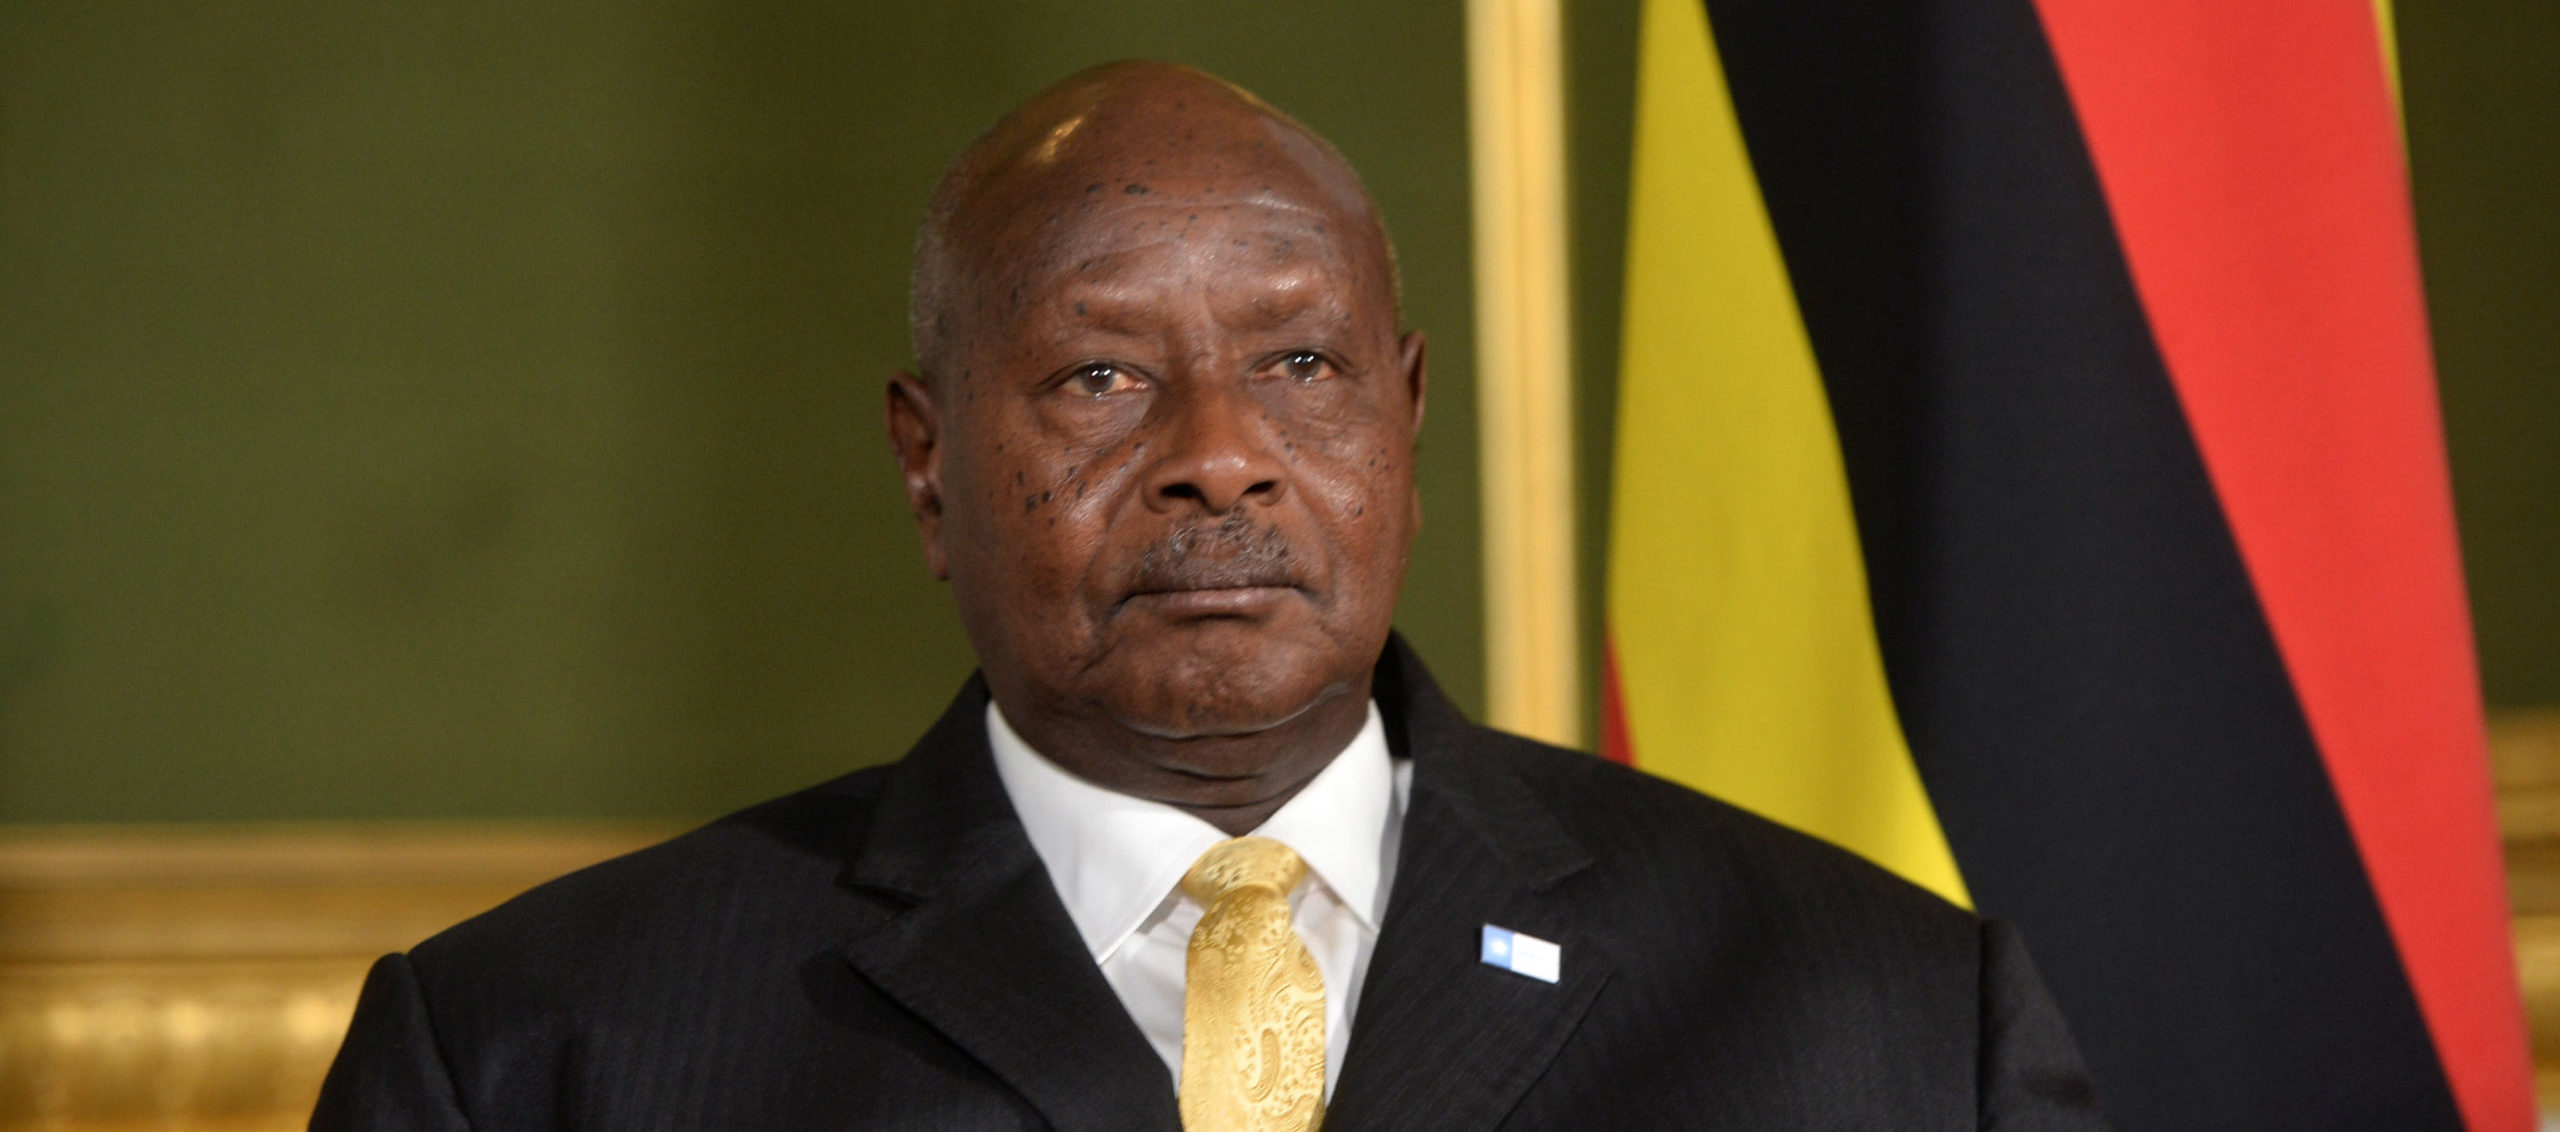 President Yoweri Museveni of Uganda